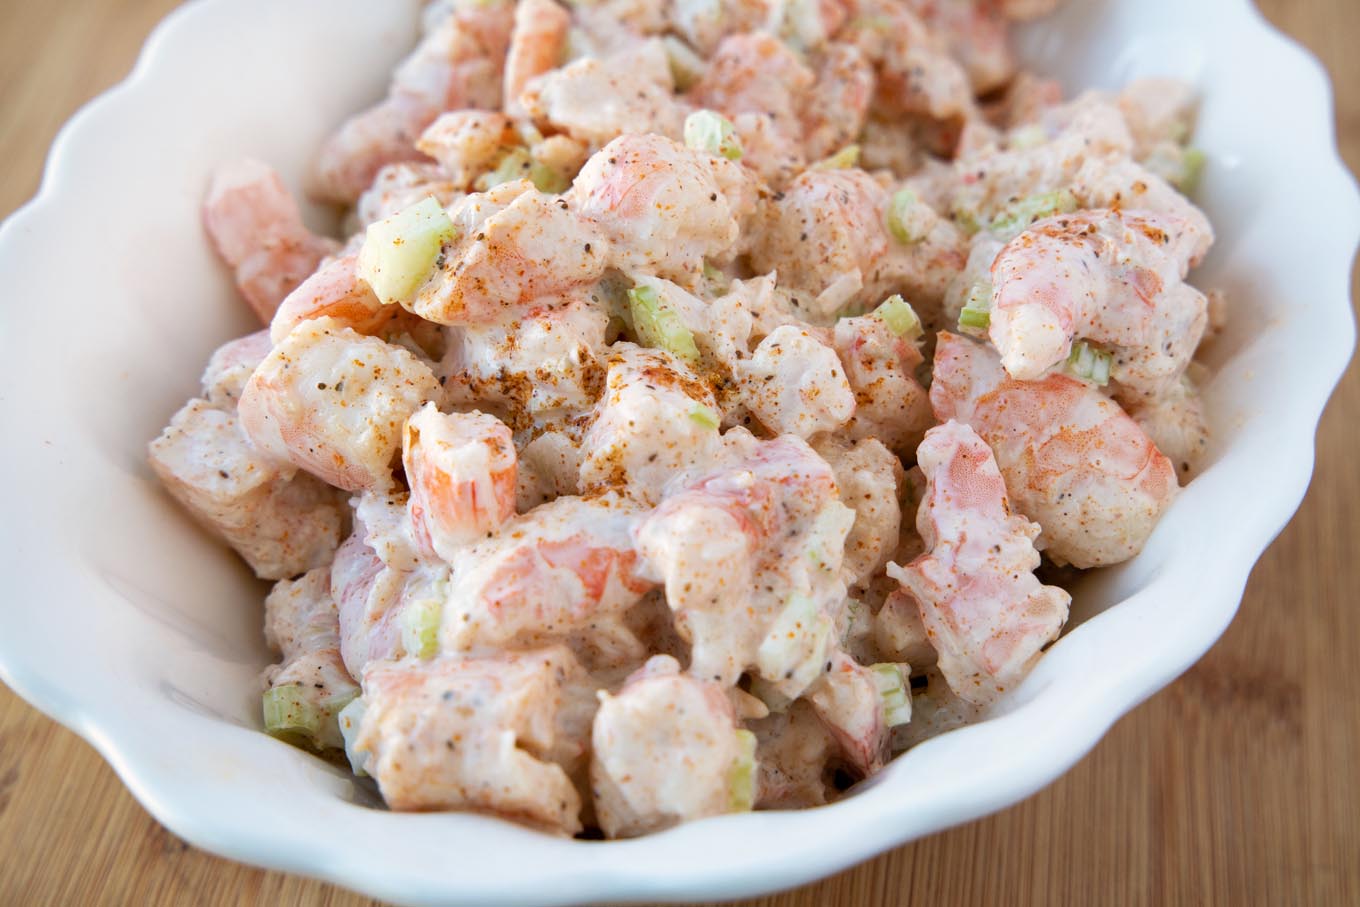 https://www.askchefdennis.com/wp-content/uploads/2020/02/shrimp-salad-in-white-bowl-10.jpg